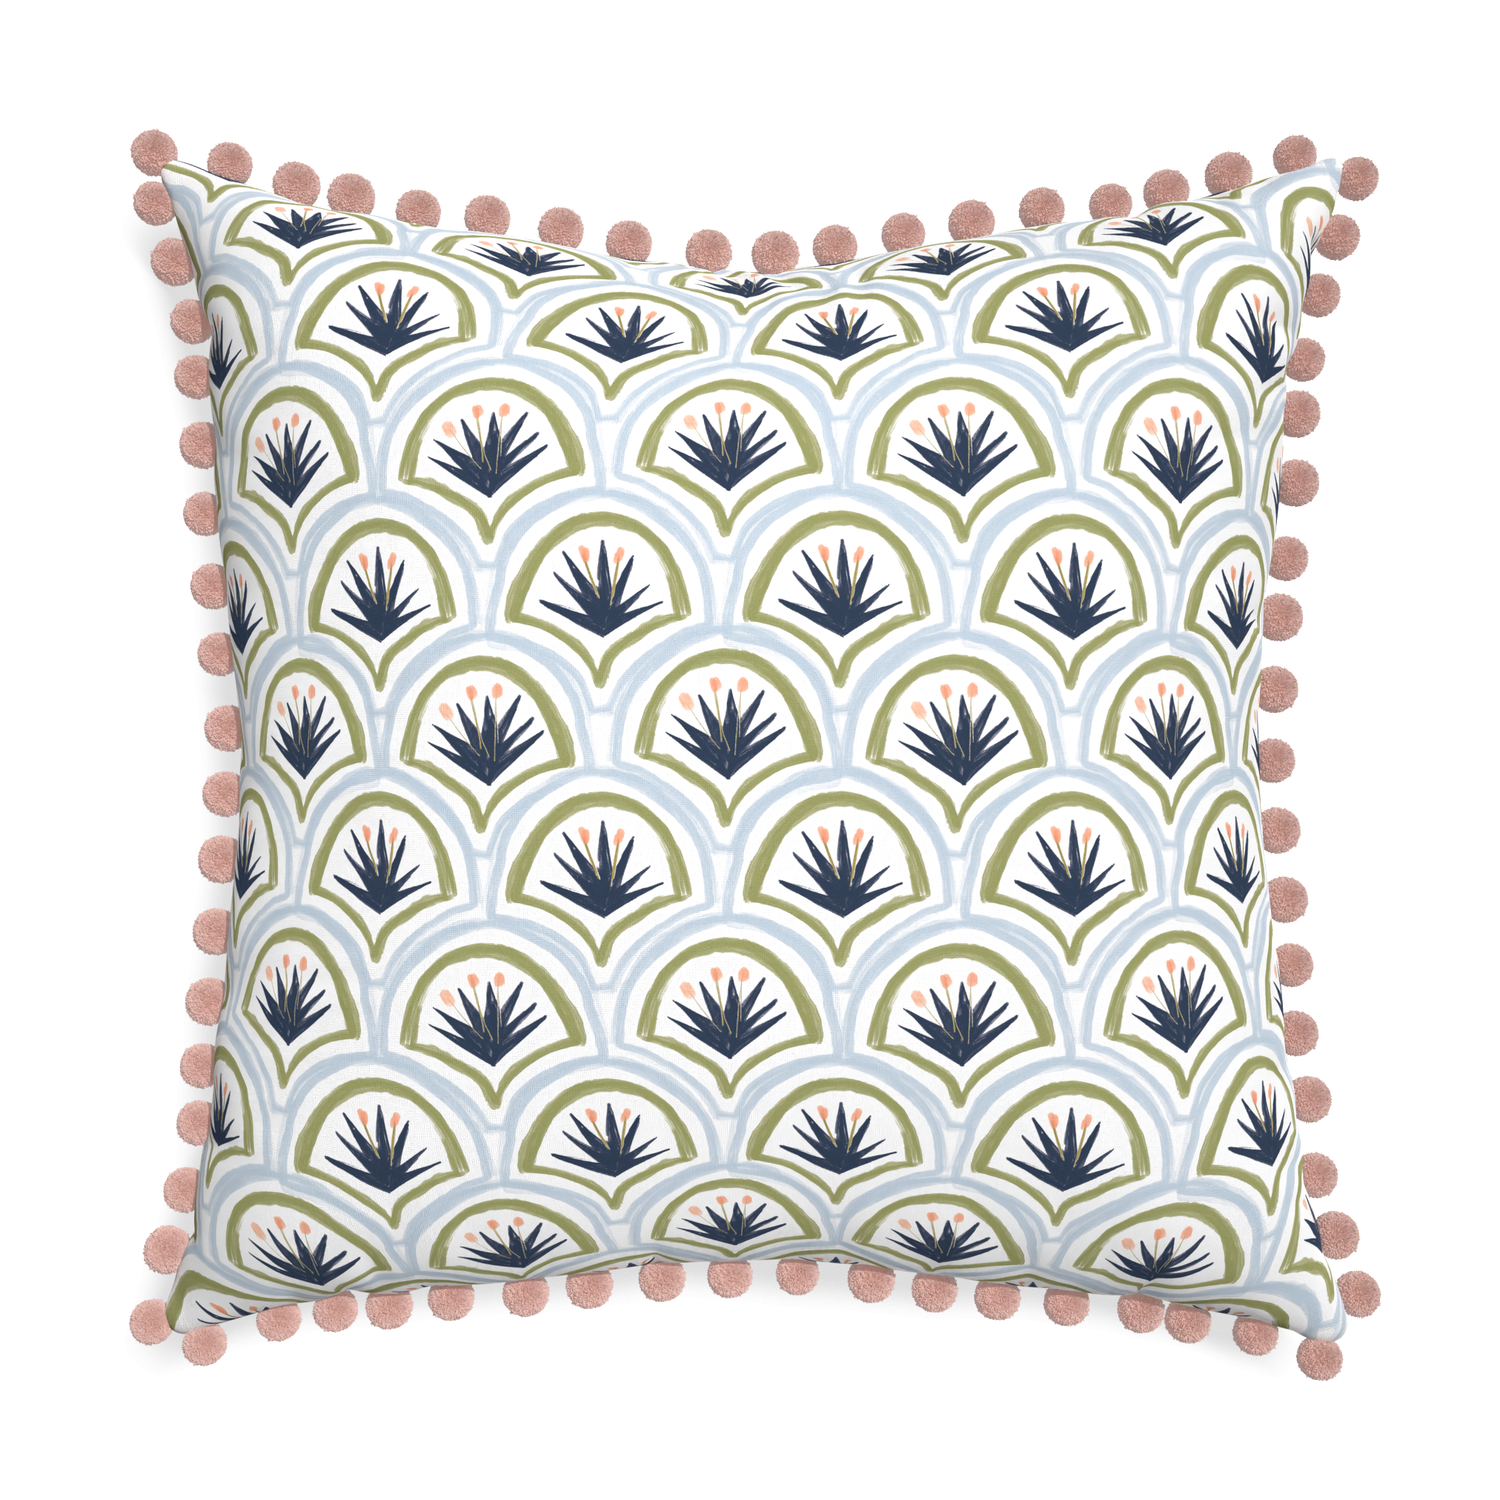 Euro-sham thatcher midnight custom art deco palm patternpillow with rose pom pom on white background